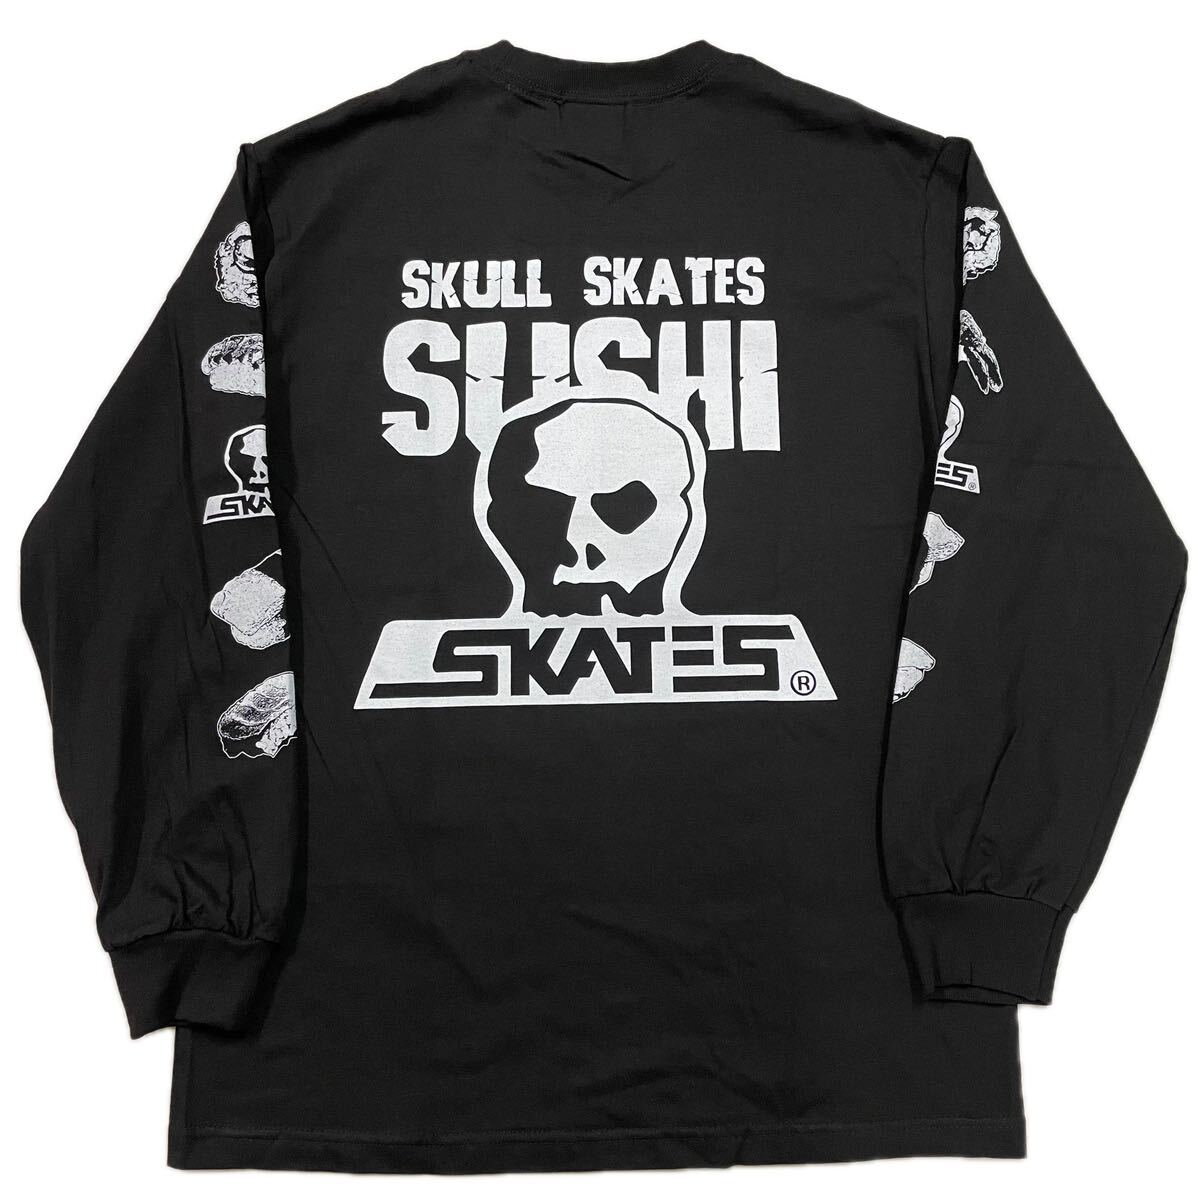 SKULL SKATES / SHUSHI ロンT スカルスケーツ 寿司 / ロングスリーブ / skateboard / スケートボード / スケボーの画像2